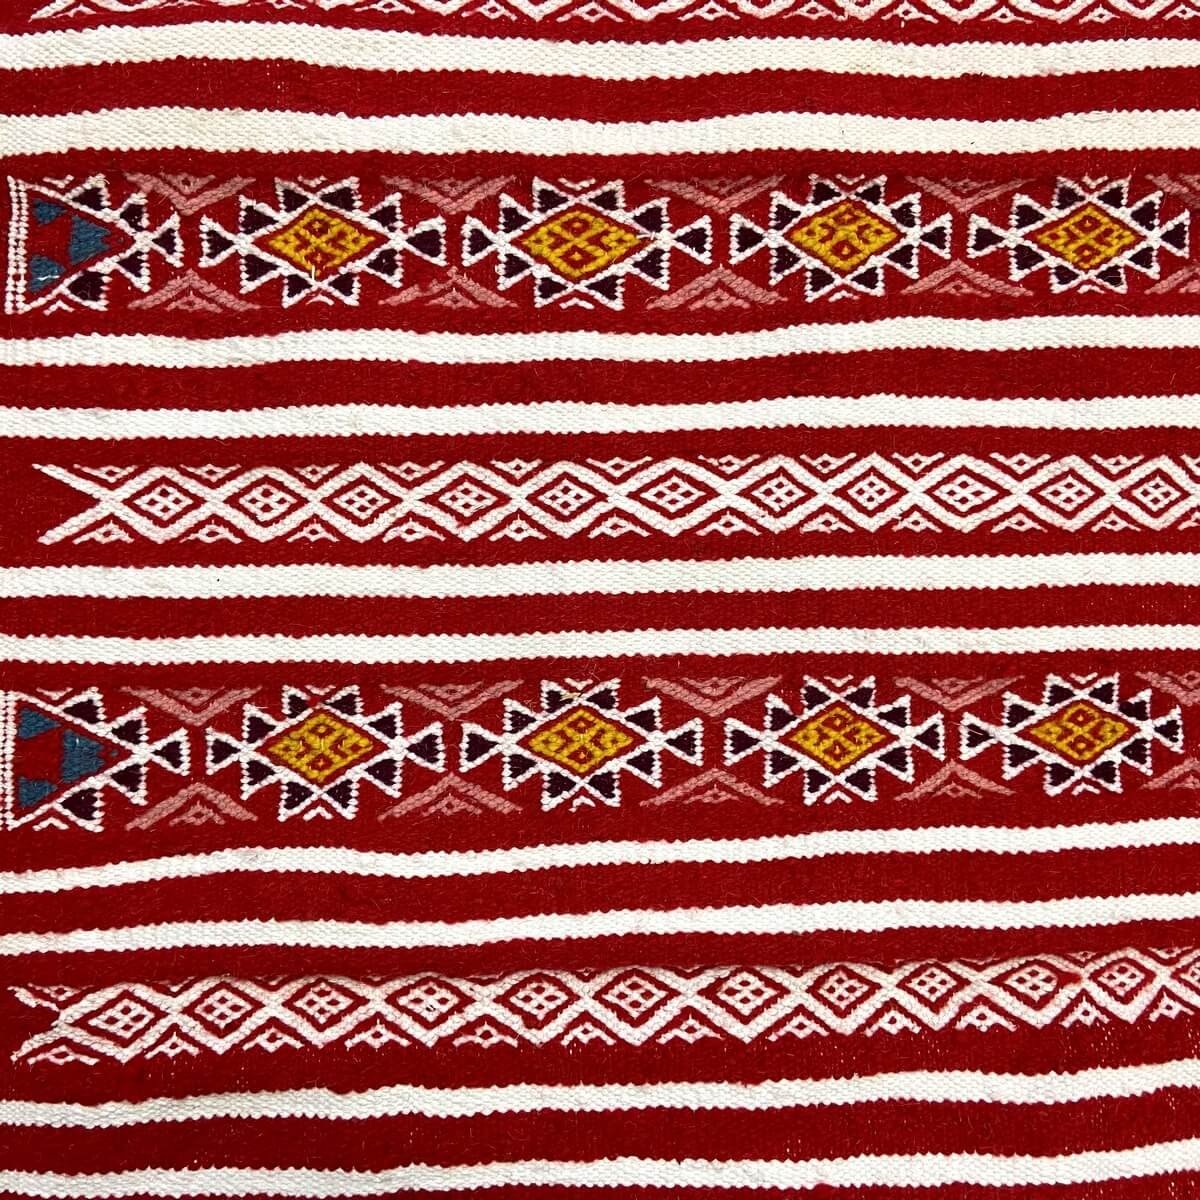 Tapete berbere Tapete Kilim Friqya 57x118 Vermelho (Tecidos à mão, Lã, Tunísia) Tapete tunisiano kilim, estilo marroquino. Tapet